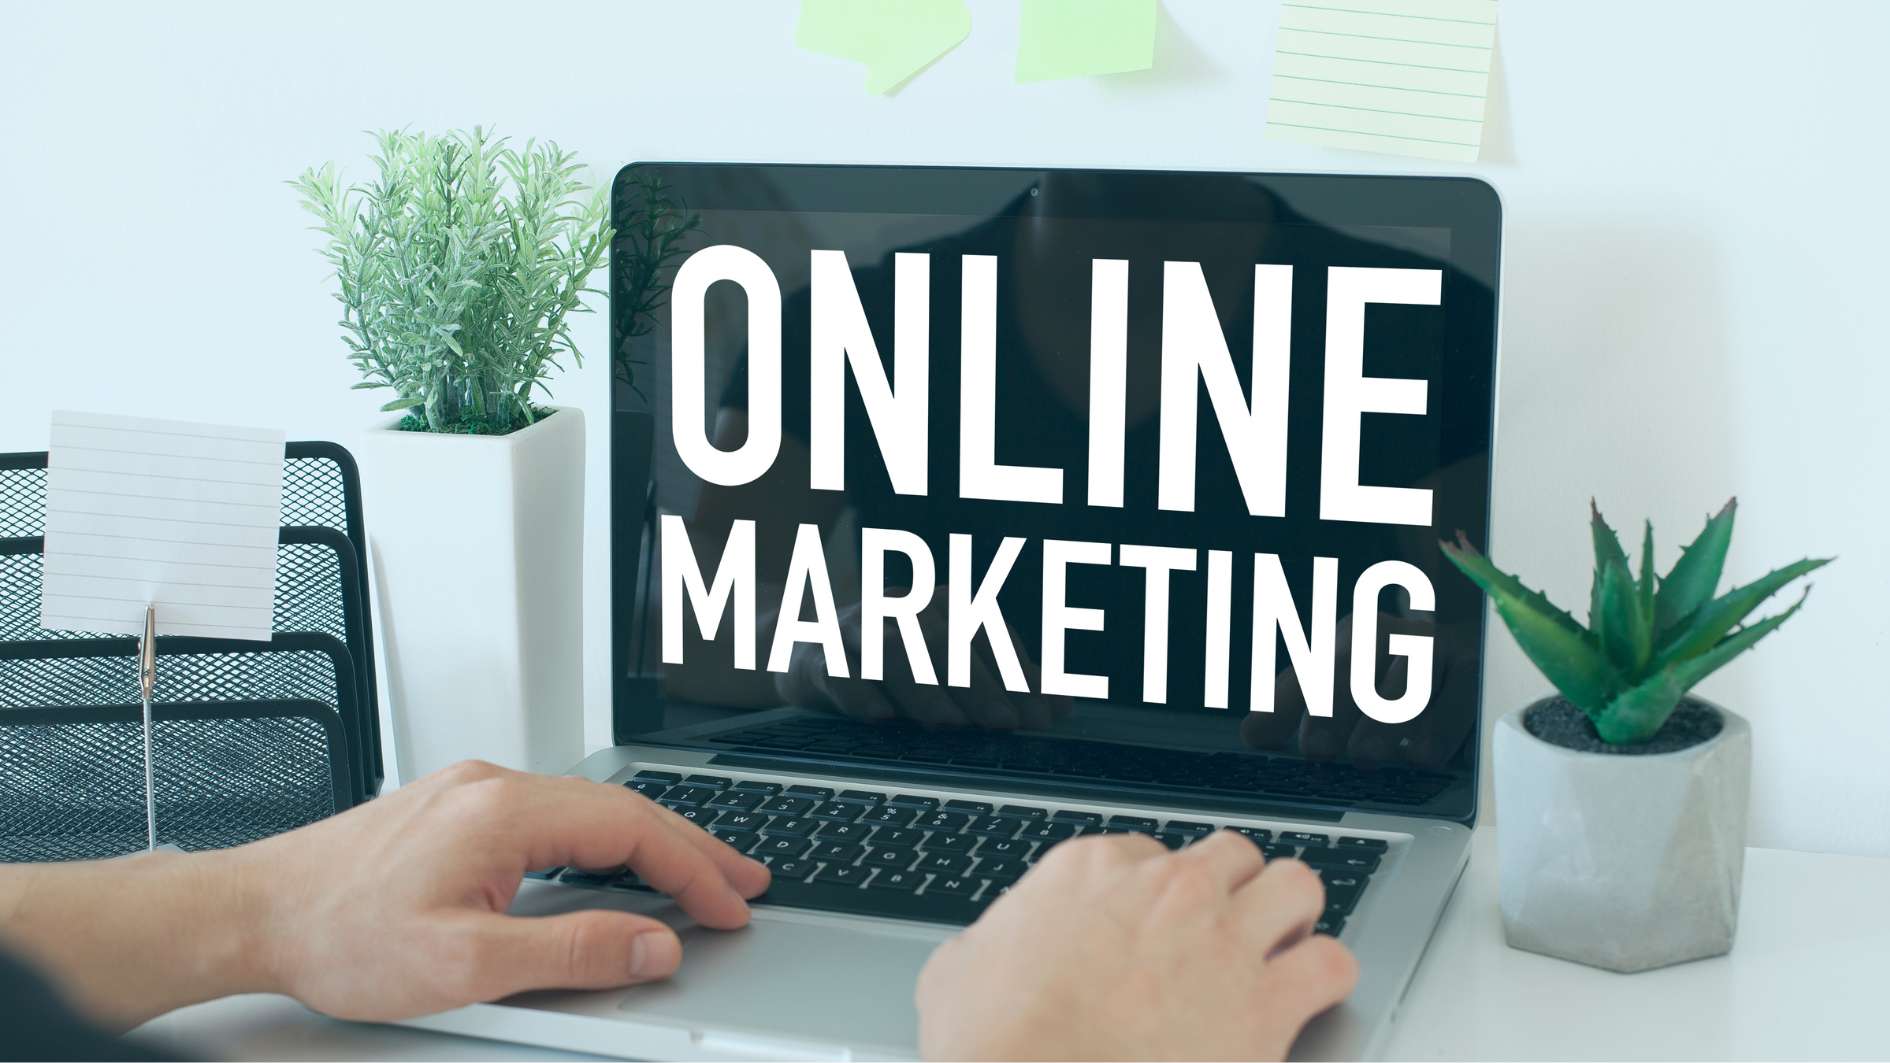 Mengenal online marketing